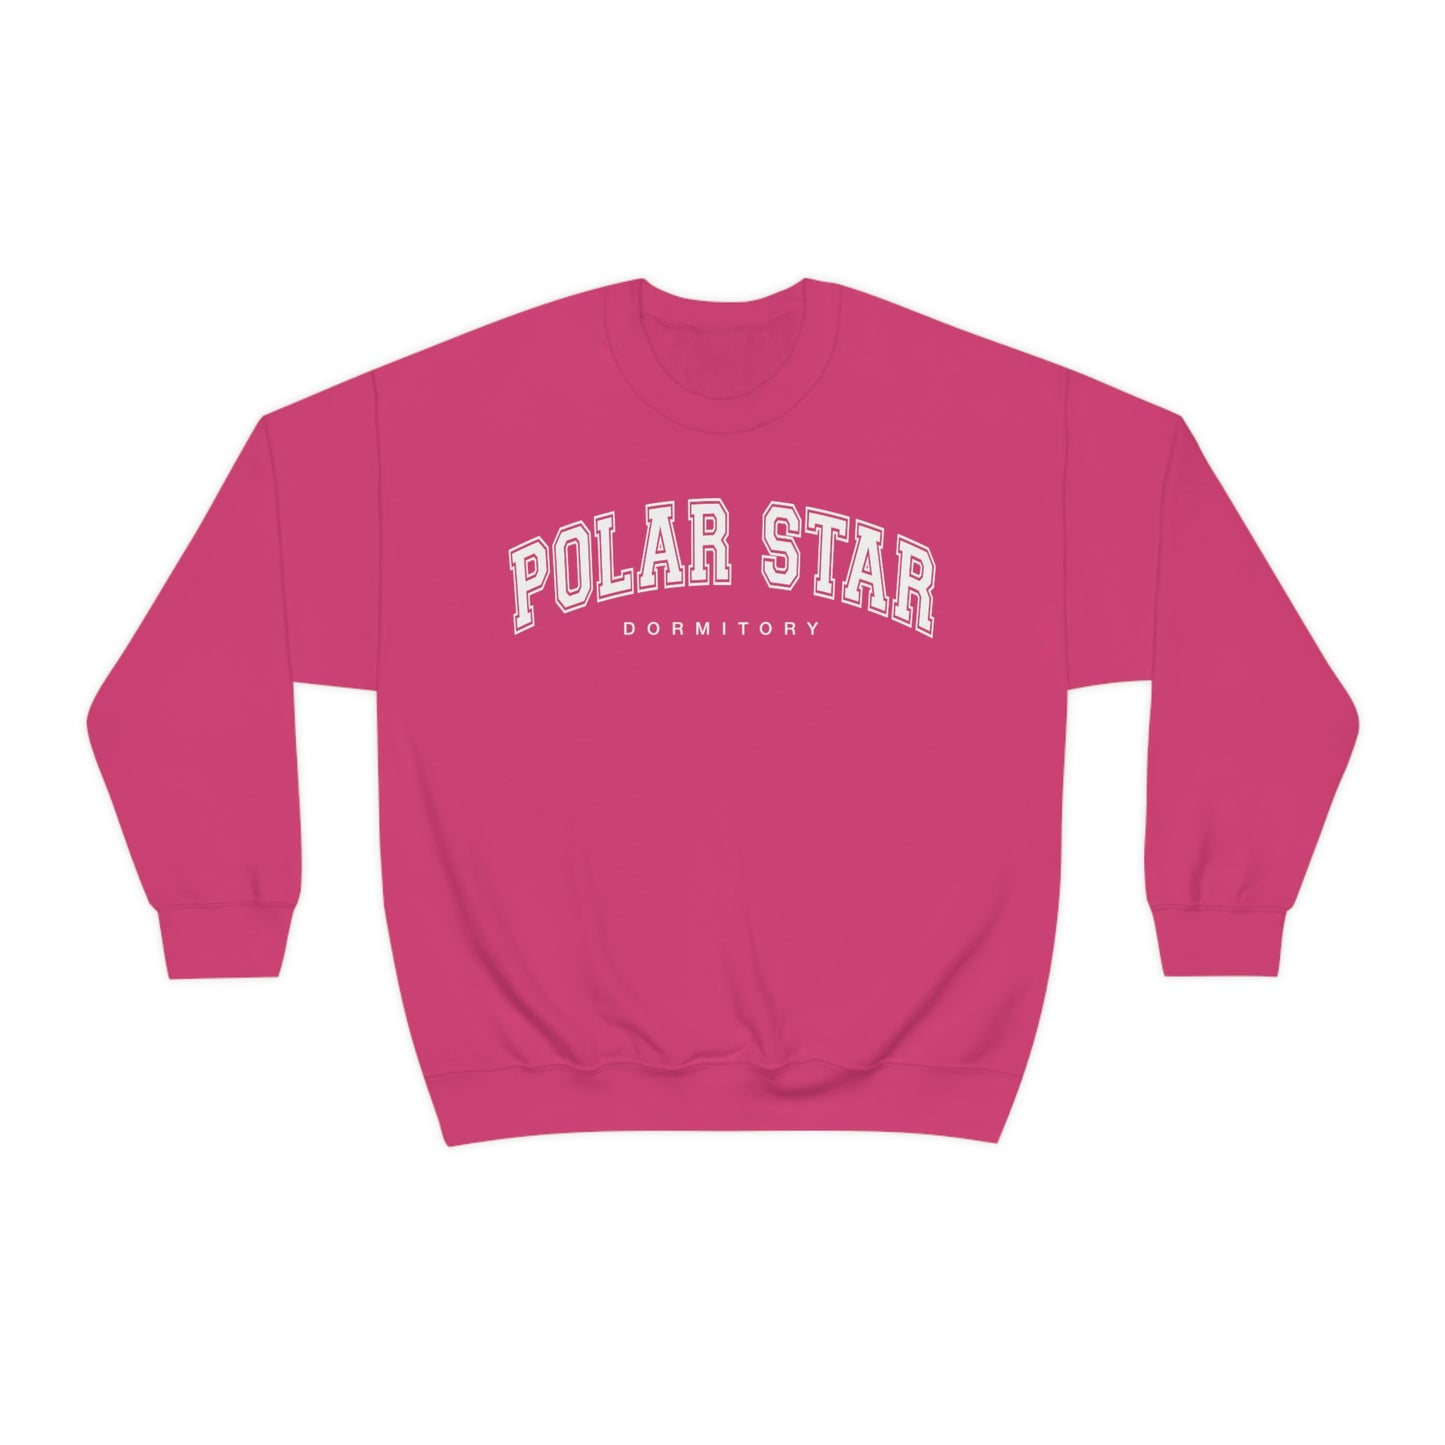 Polar Star sweatshirt crew neck Dorms